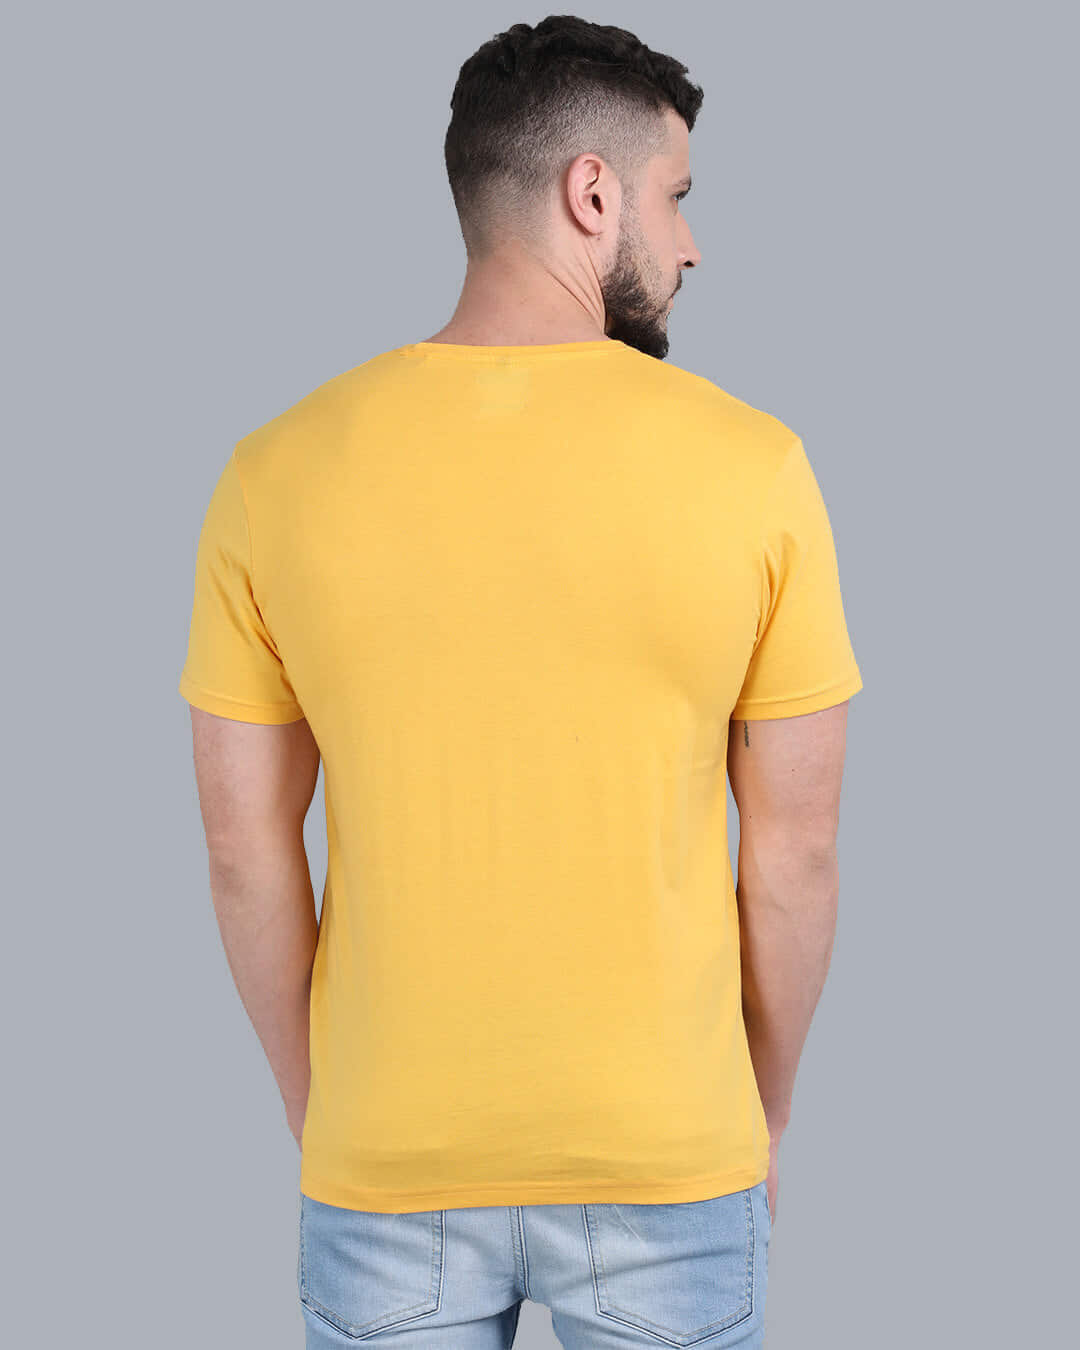 Shop Pocket Design T-Shirt Yellow-Back